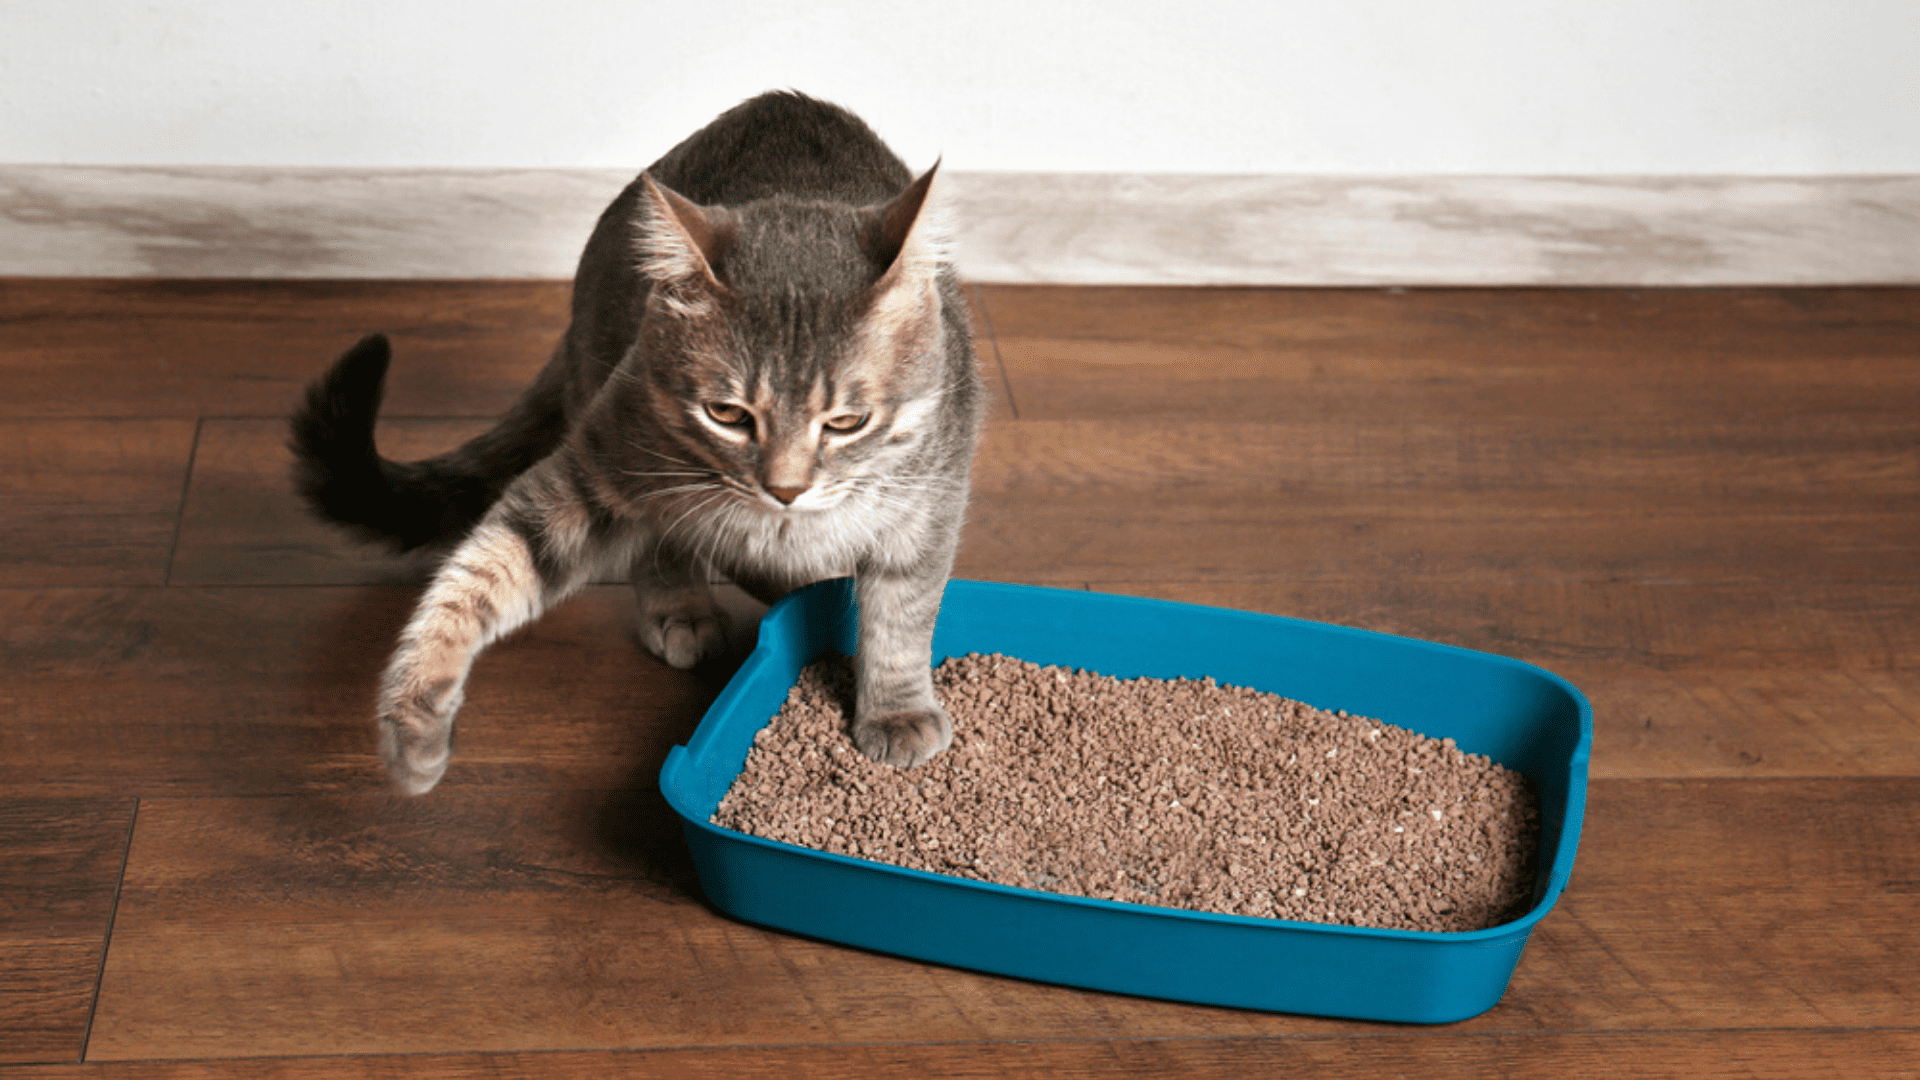 Caixa de Areia Grande Gelo - Pet Games - Areia para Gato